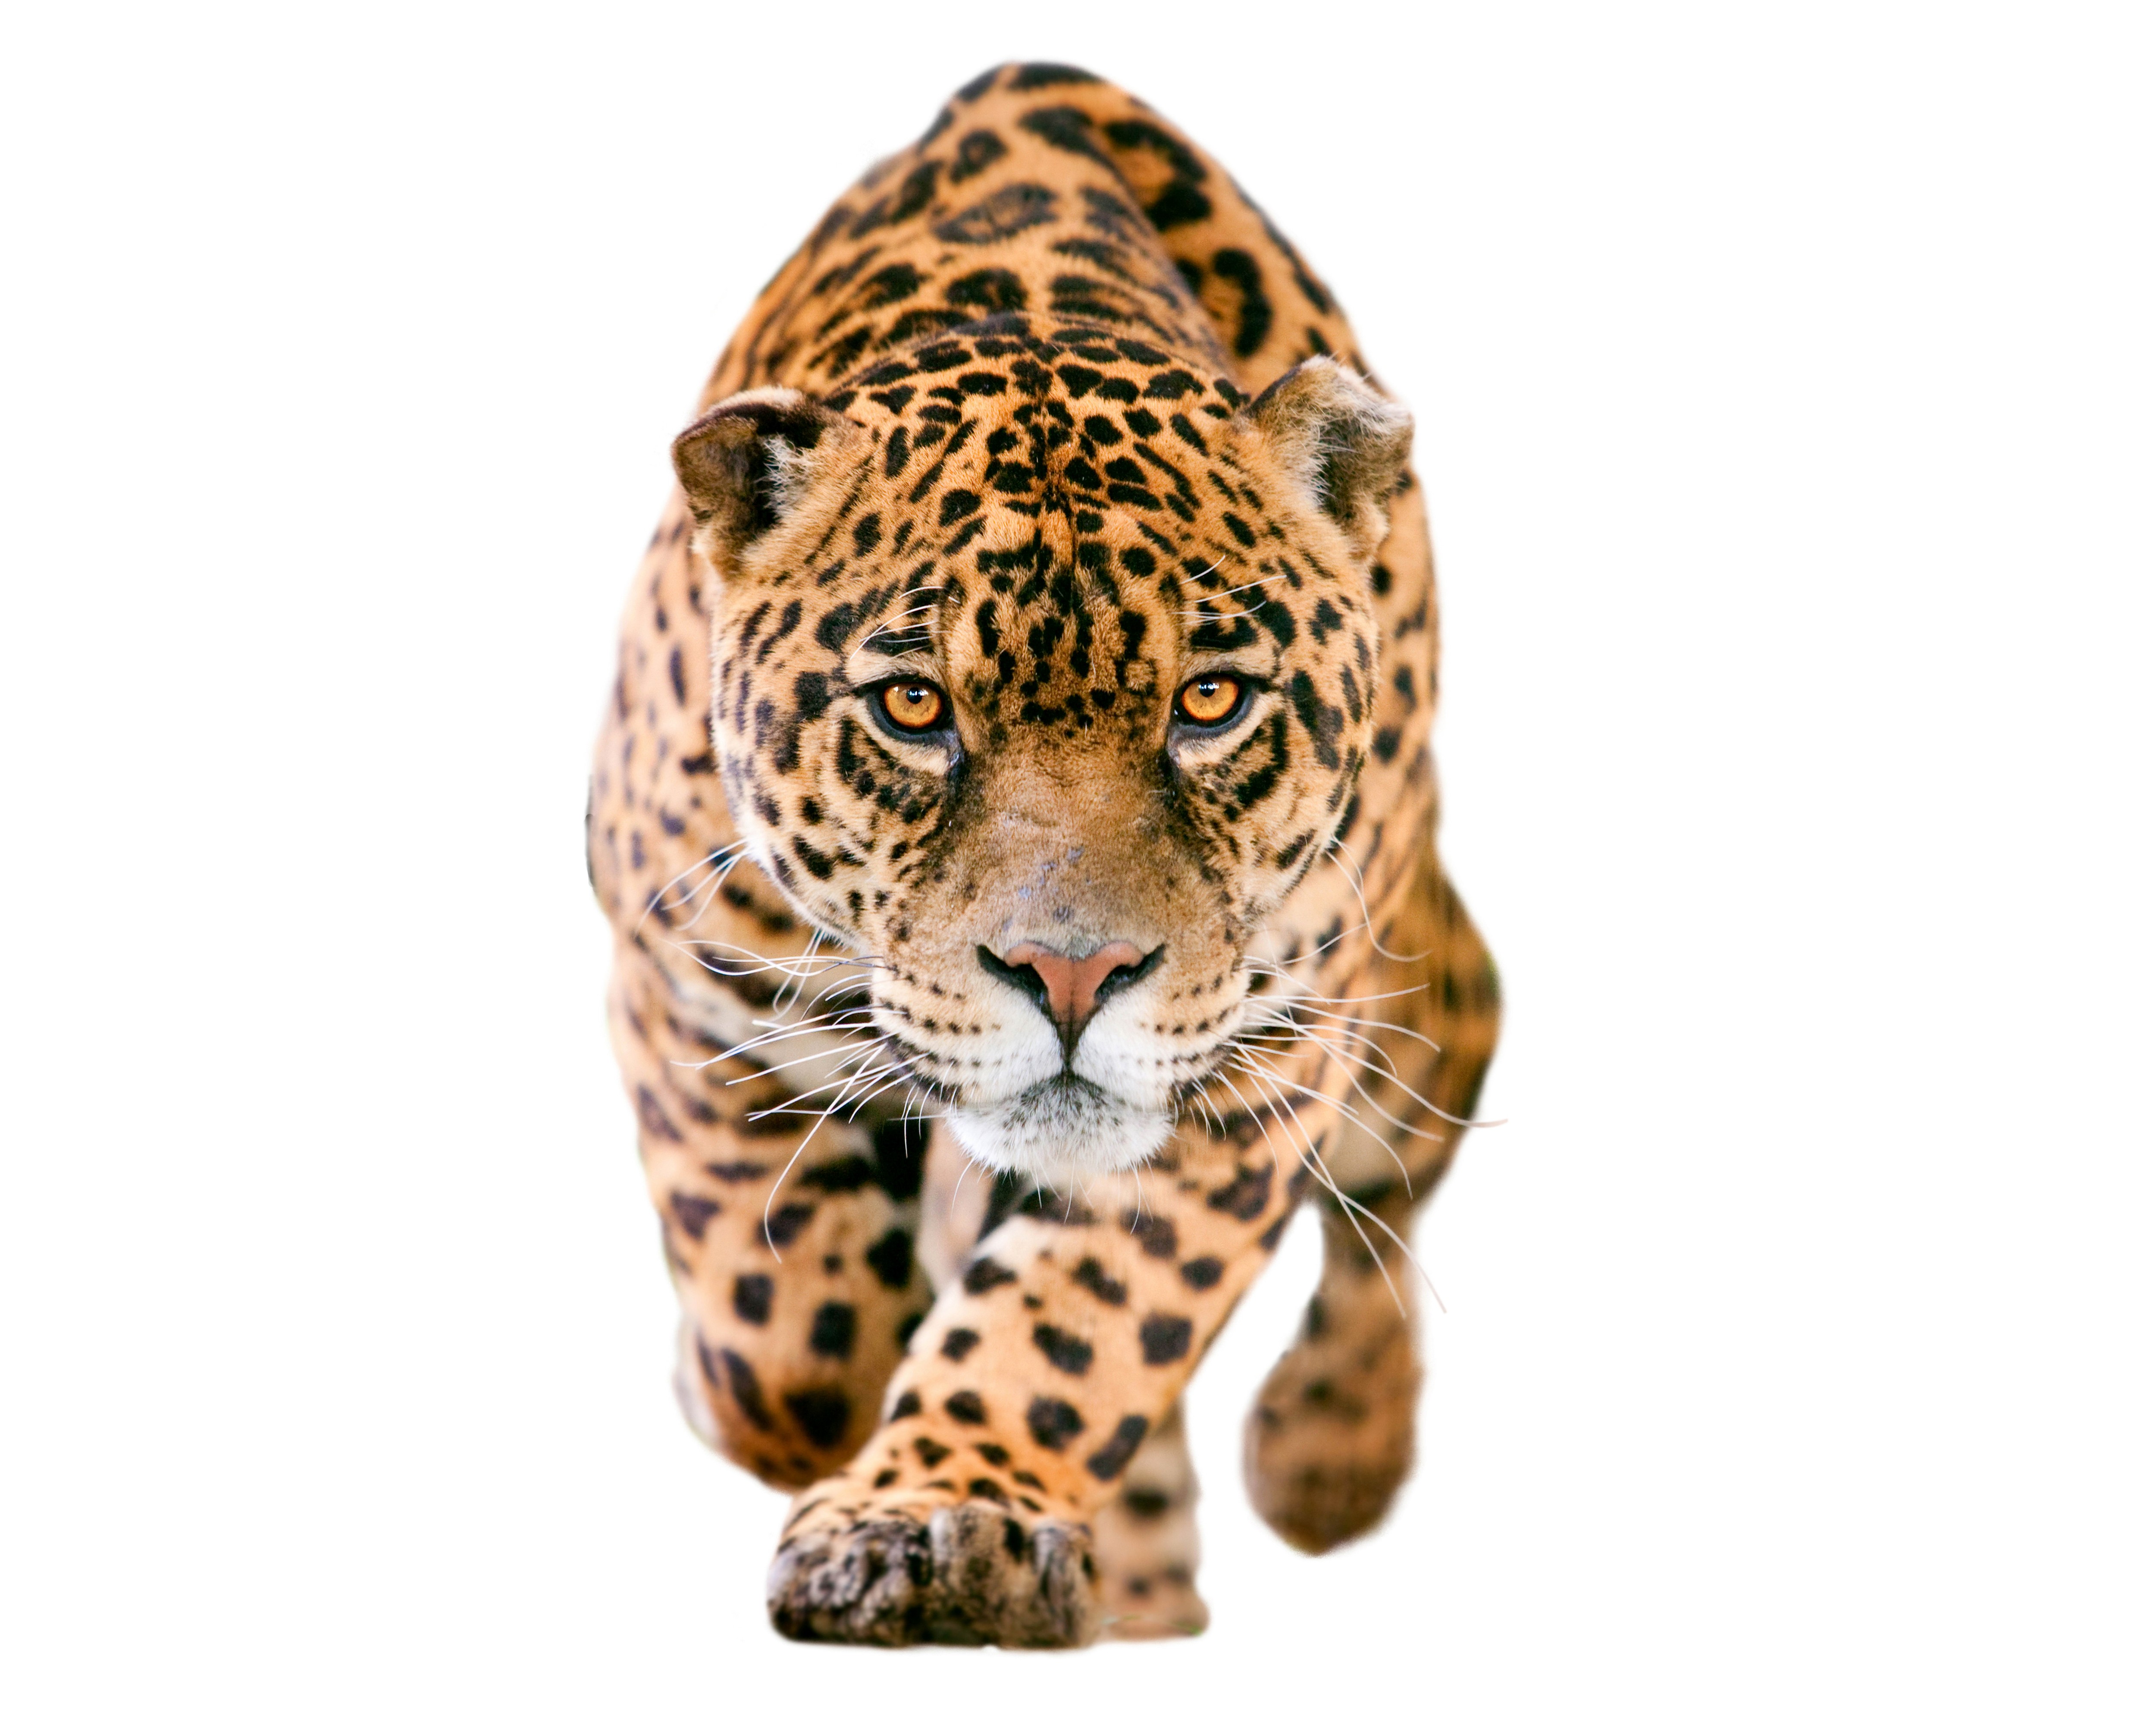 General 5000x4000 animals mammals big cats leopard feline simple background